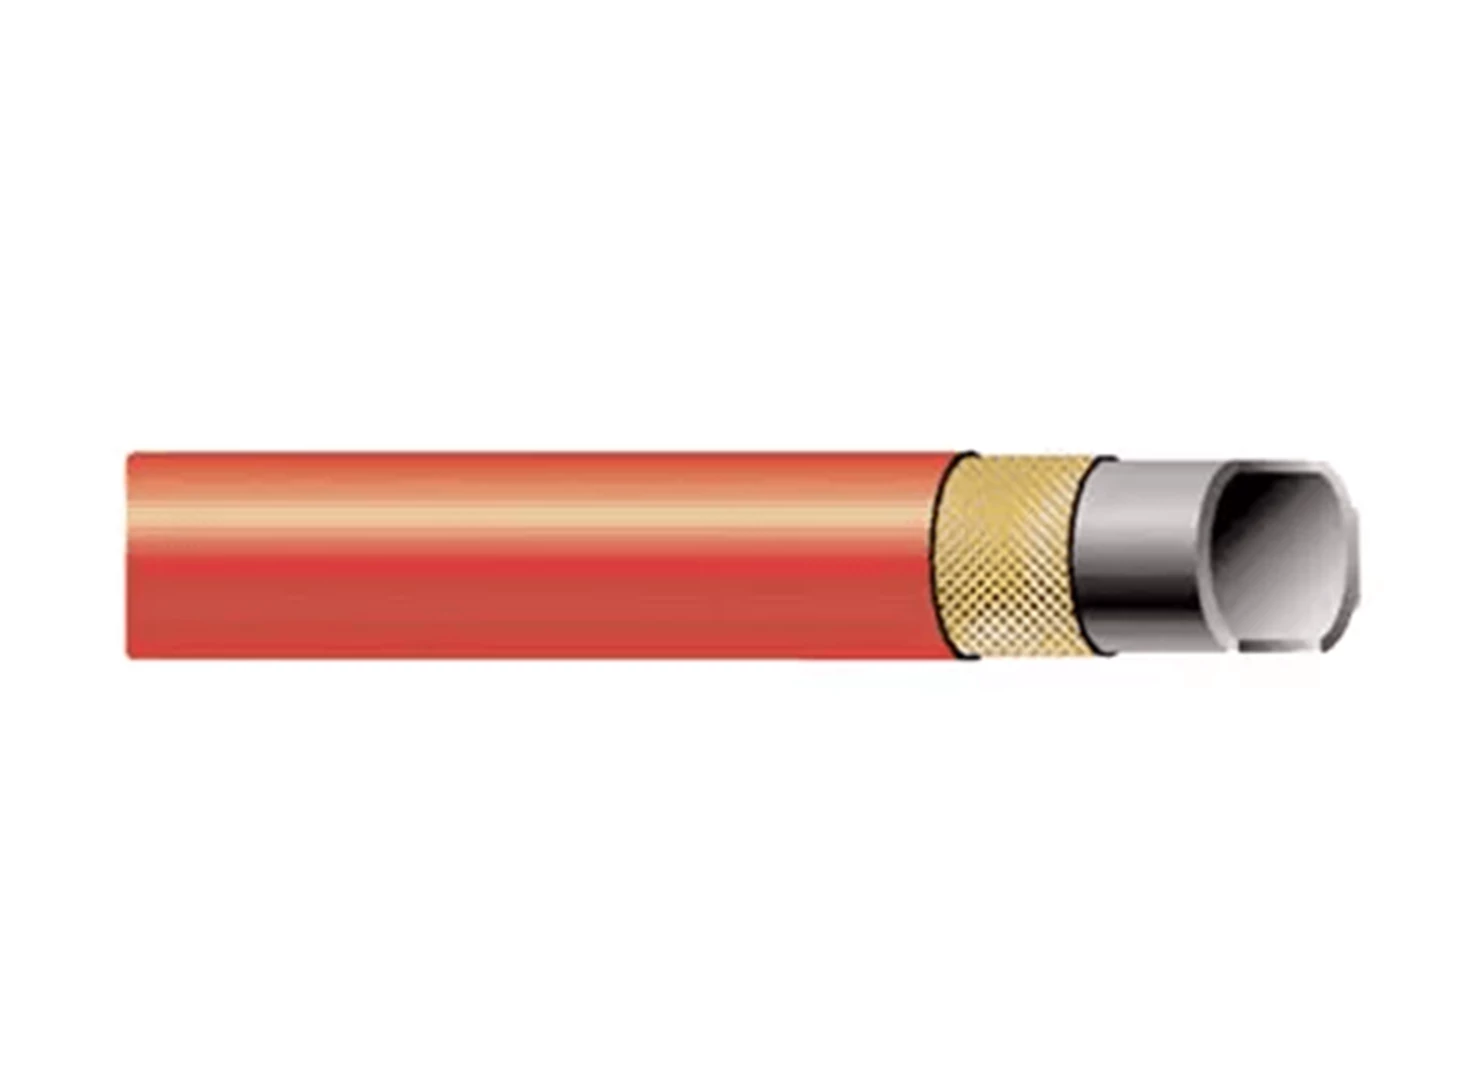 Product: Acetylene hose 9mm